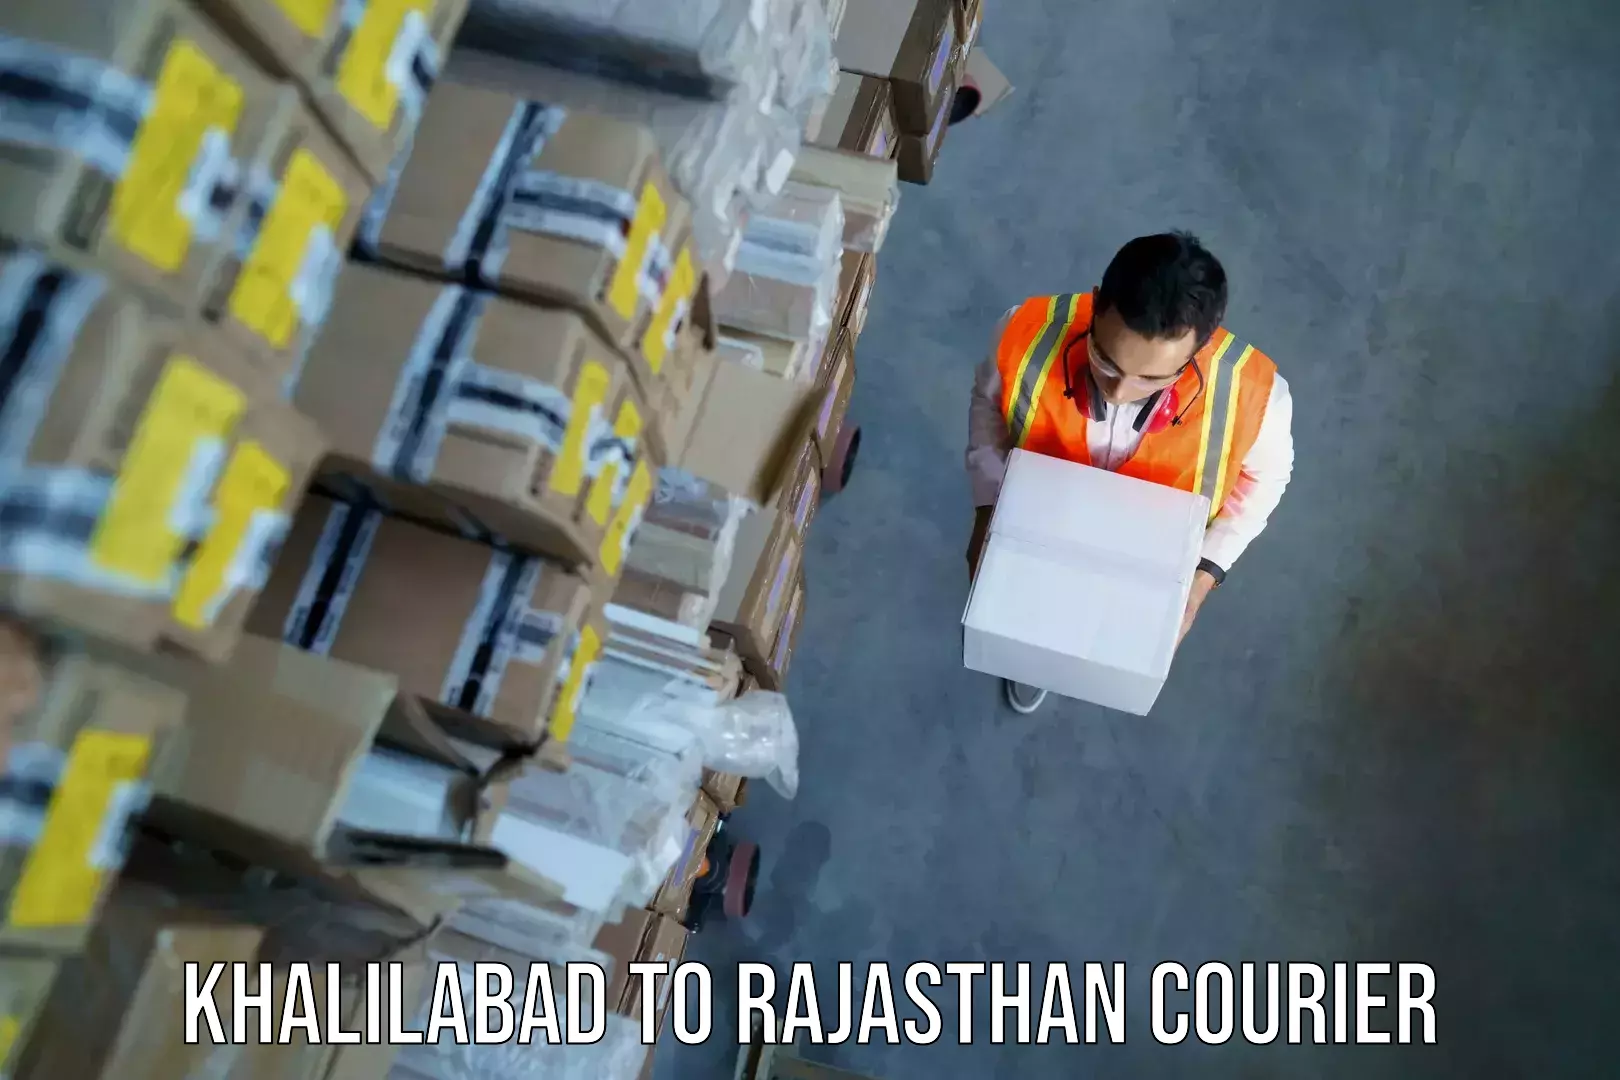 Baggage relocation service Khalilabad to Rajasthan